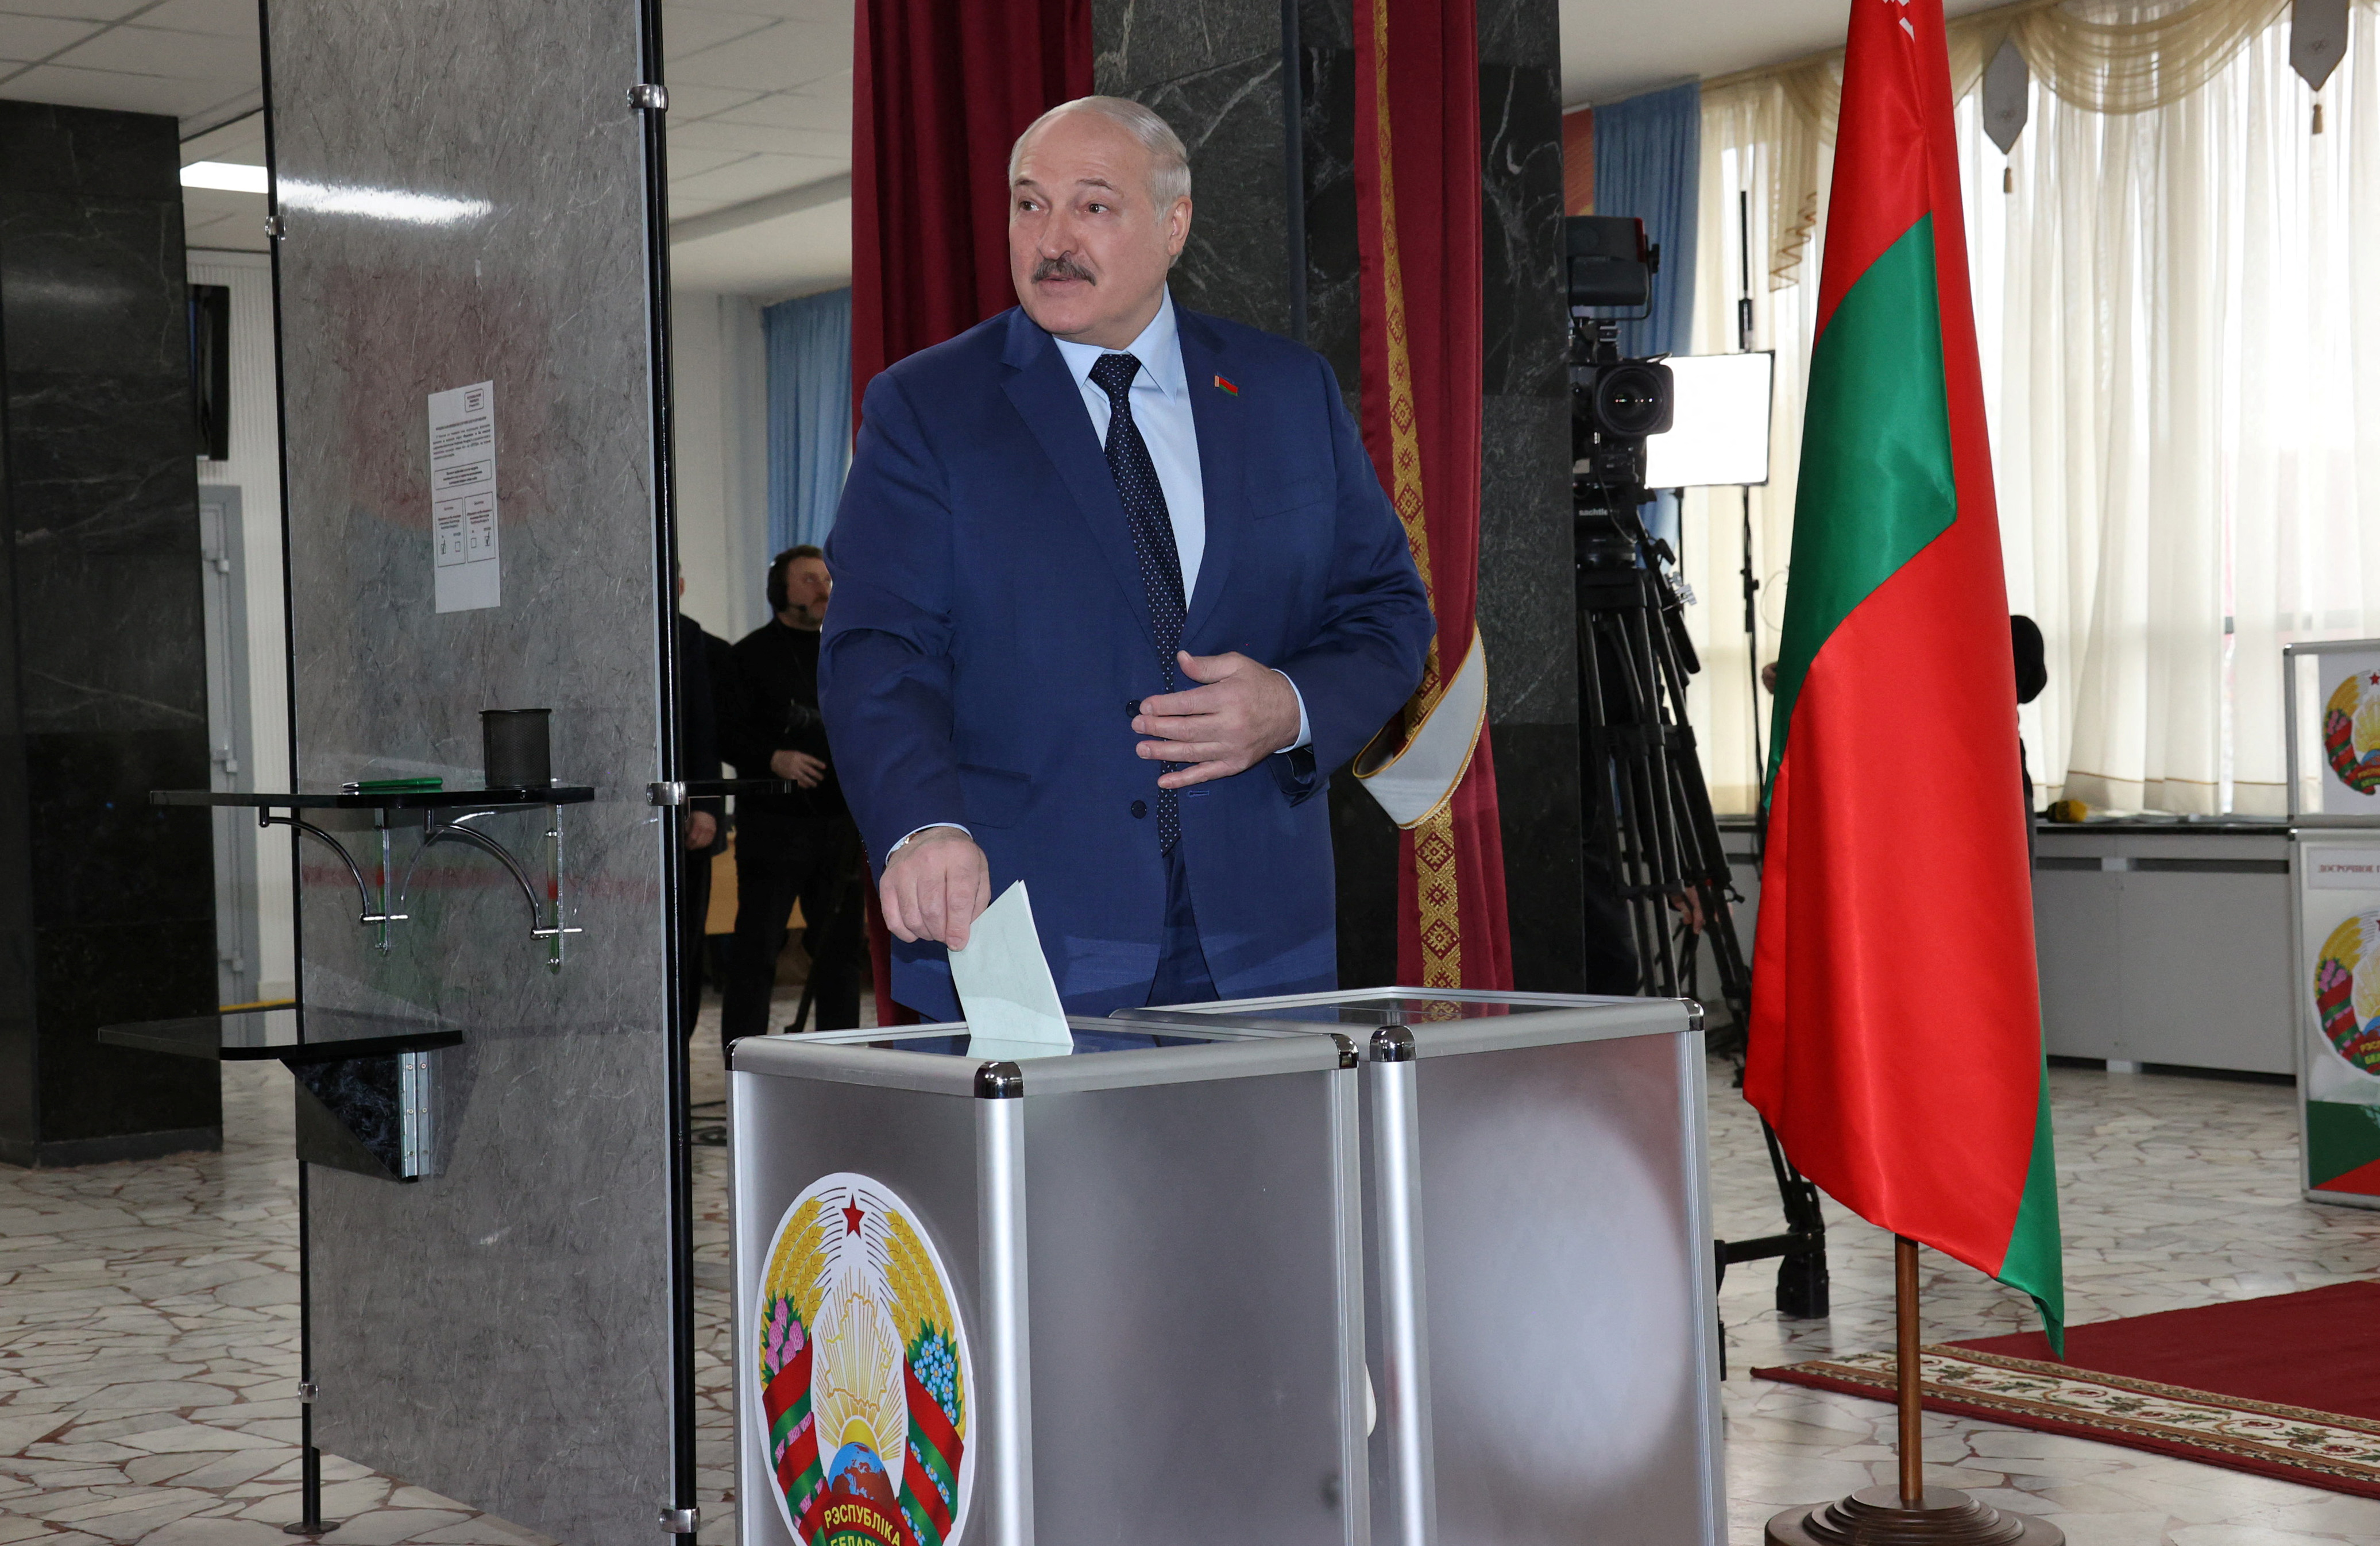 Belarusian President Lukashenko casts his ballot at constitutional referendum in Minsk